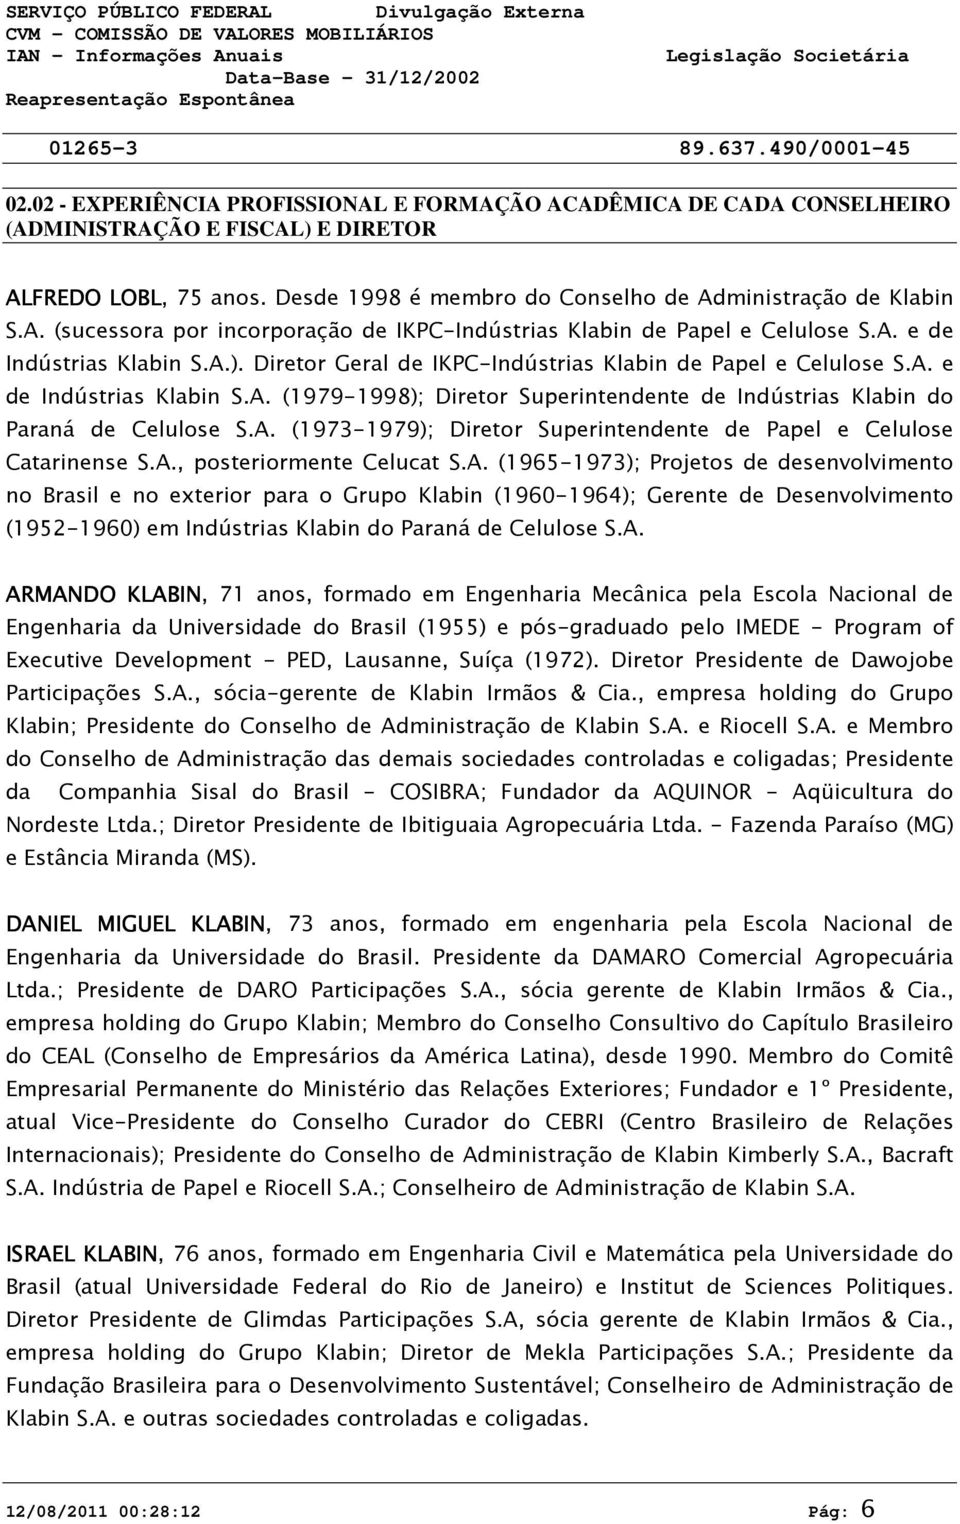 Diretor Geral de IKPC-Indústrias Klabin de Papel e Celulose S.A. e de Indústrias Klabin S.A. (1979-1998); Diretor Superintendente de Indústrias Klabin do Paraná de Celulose S.A. (1973-1979); Diretor Superintendente de Papel e Celulose Catarinense S.